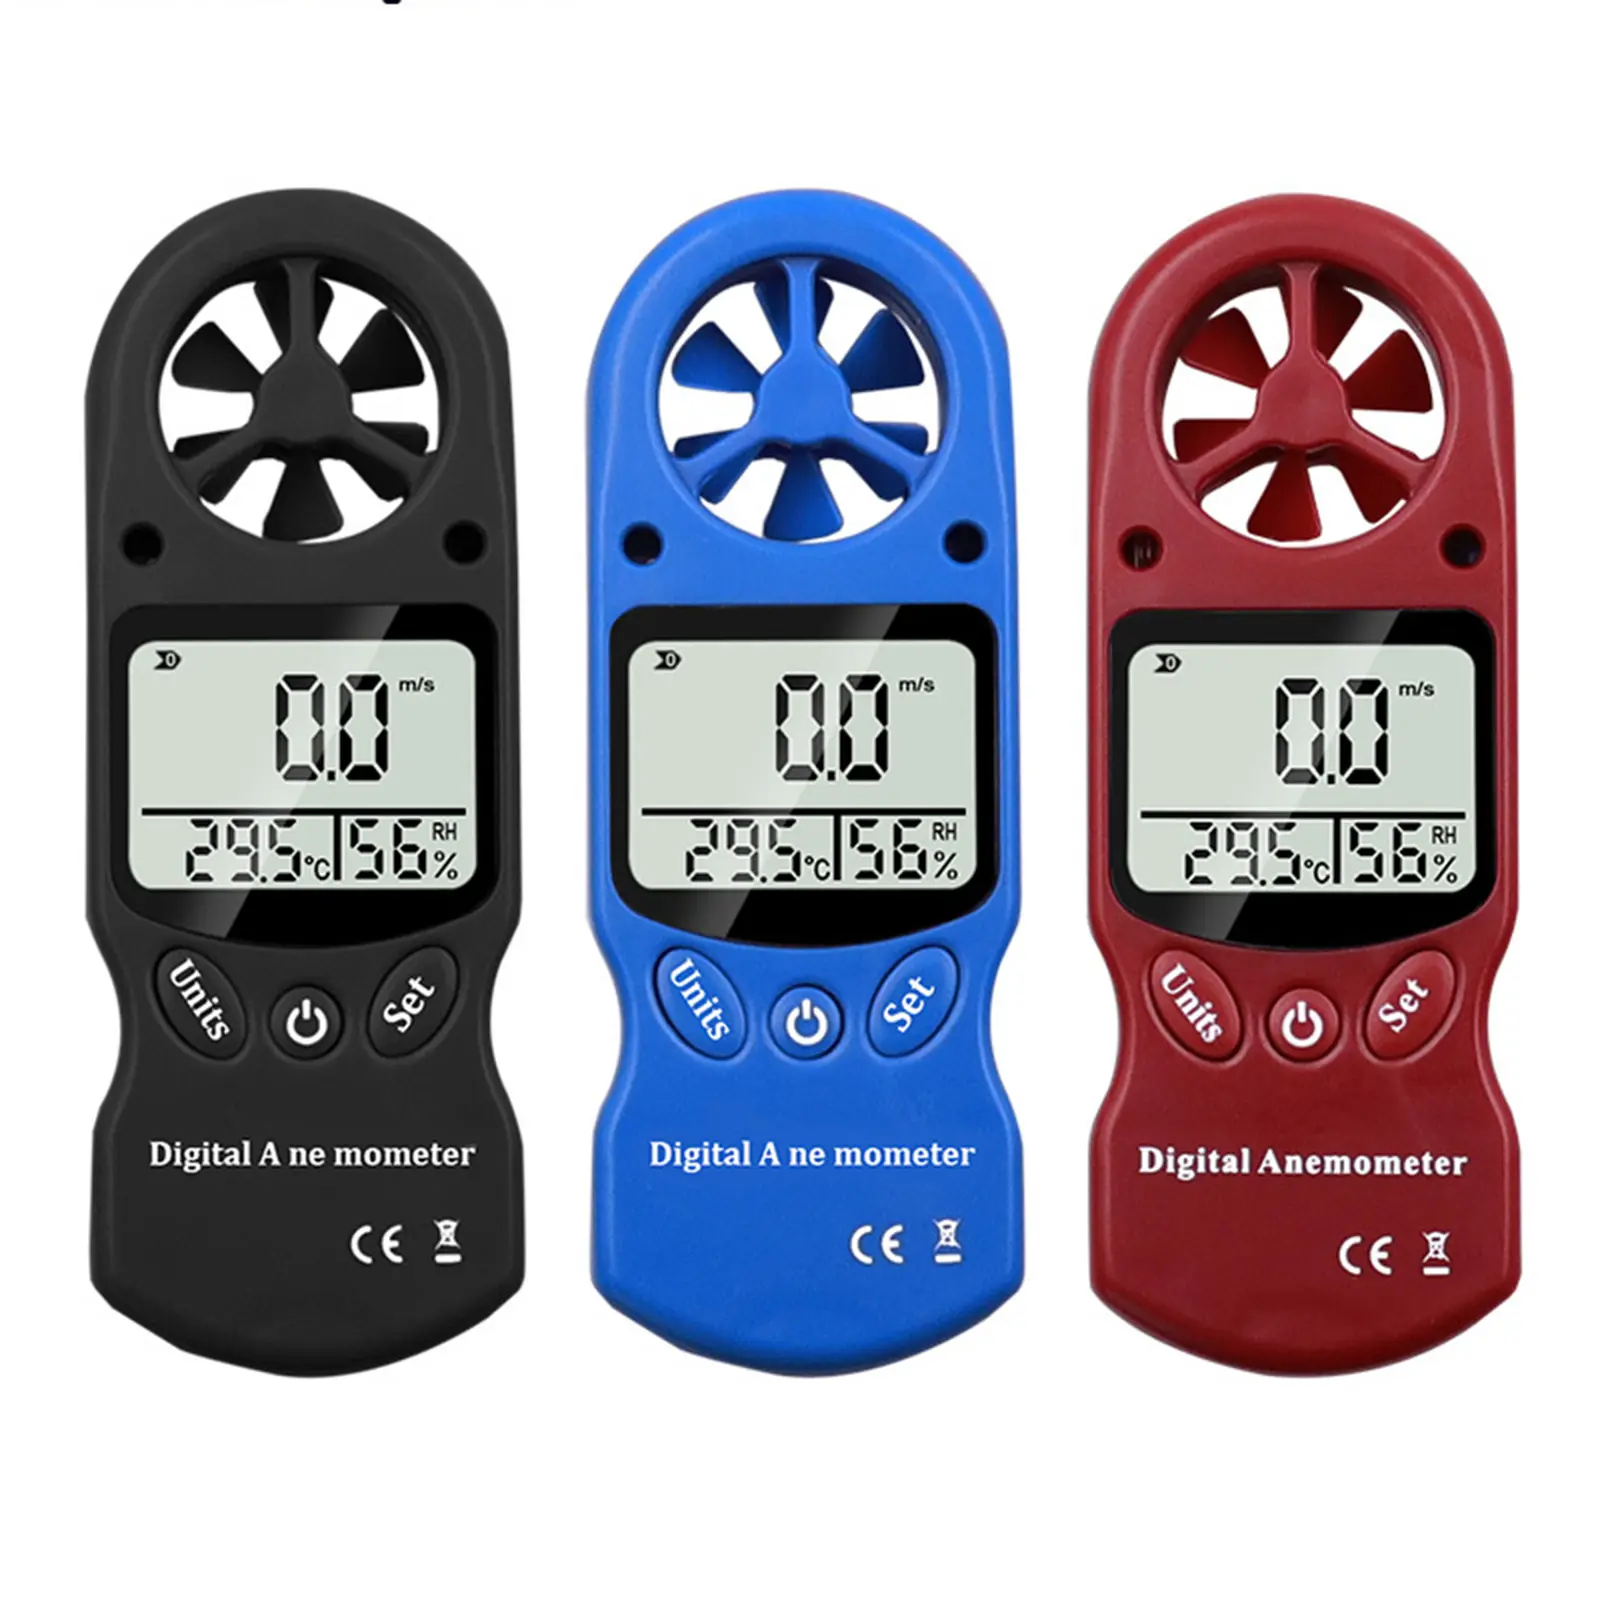 Tragbares Mini-Handheld-Multifunktions-Wind geschwindigkeit messgerät Digitales Anemometer-Hygrometer-Thermometer